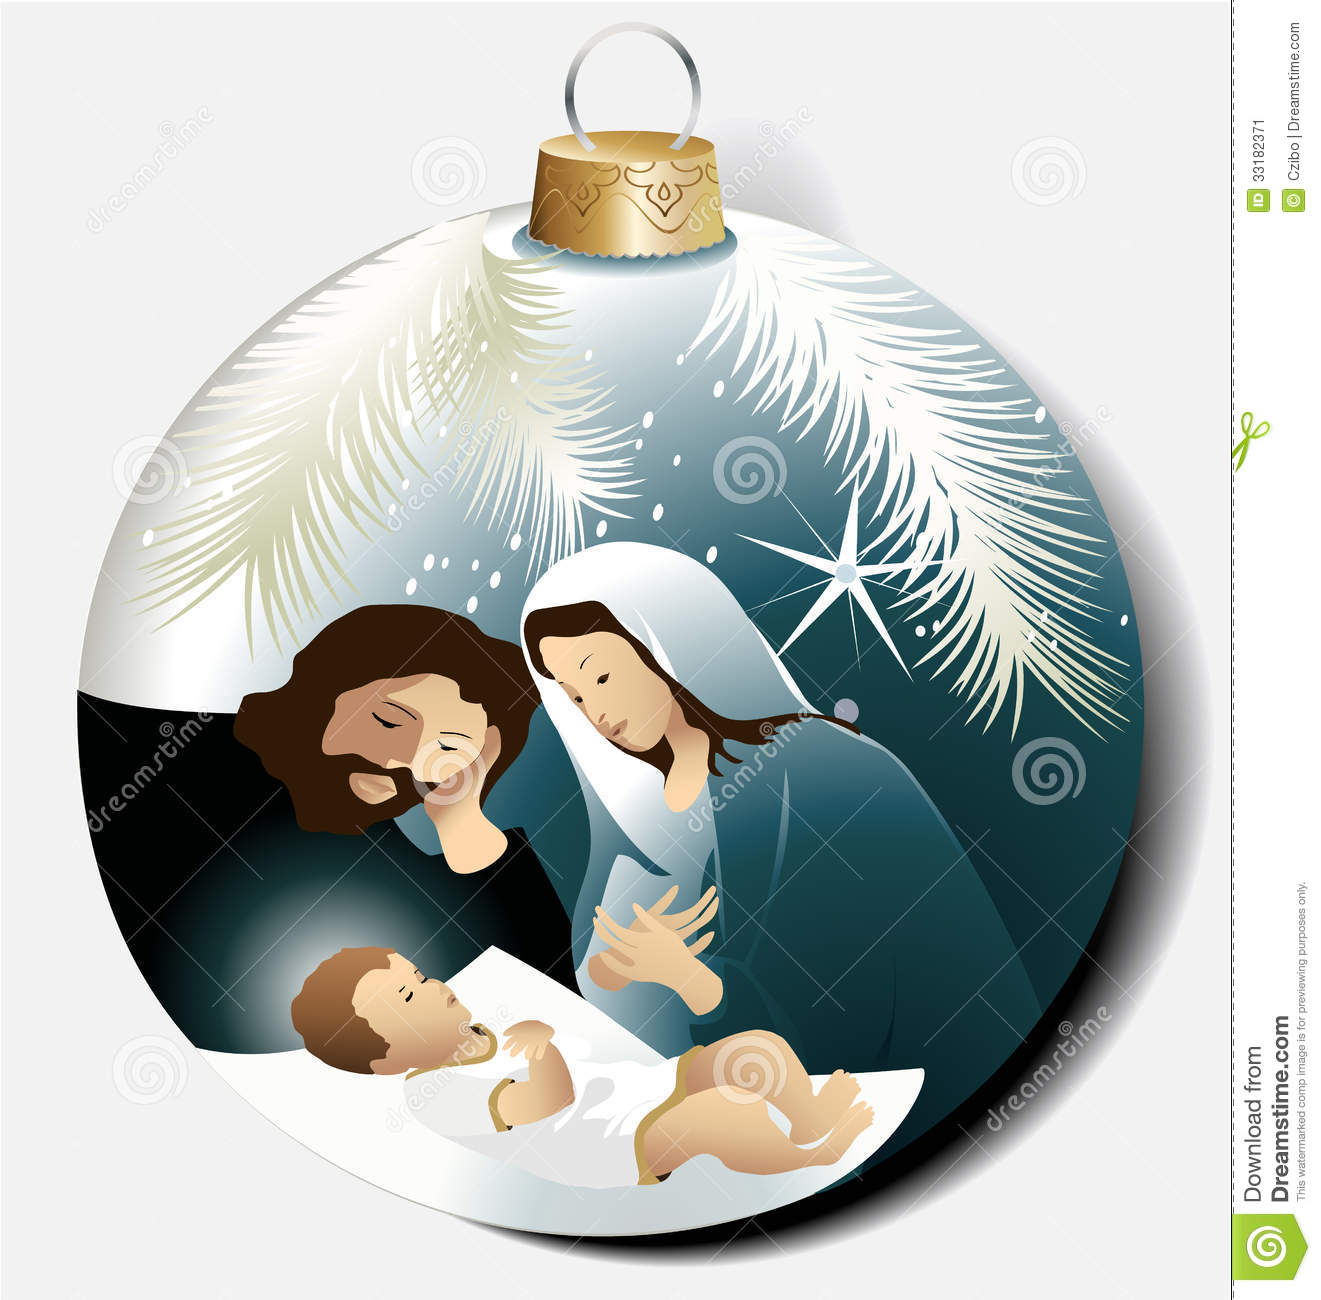 Christmas Ball With Holy Family Stock Image   Image  33182371